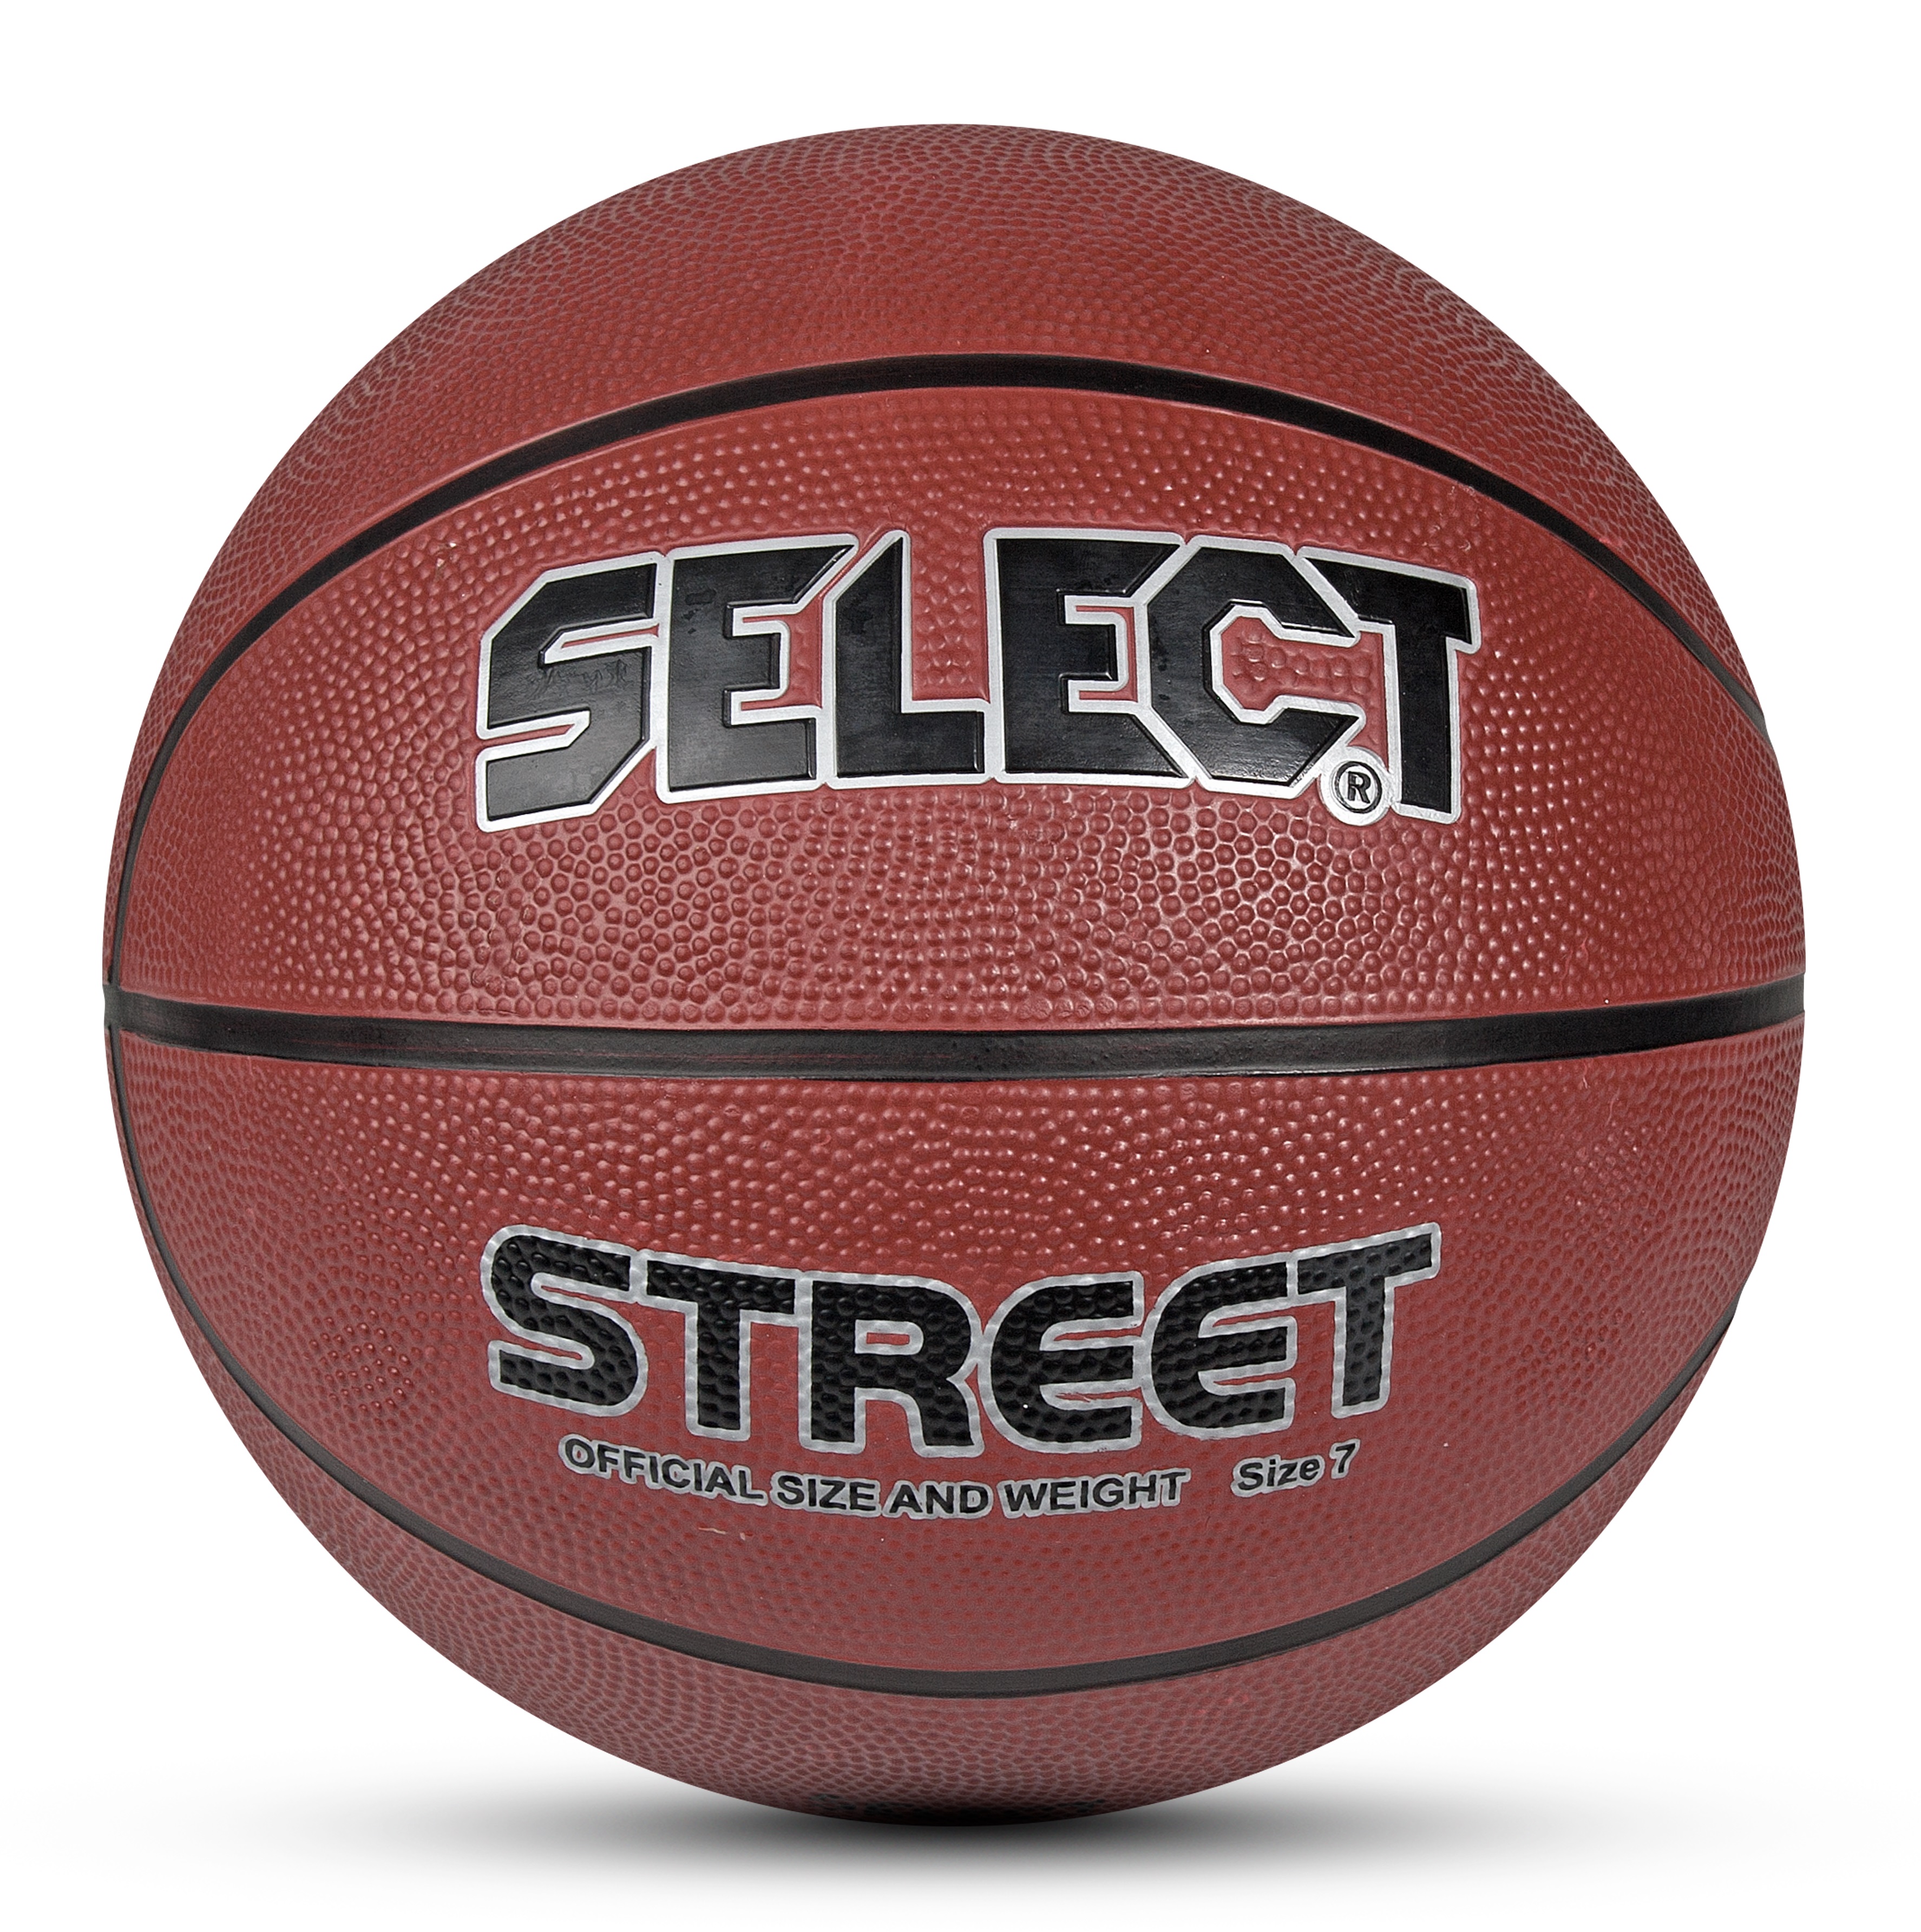 Ball street. Стрит Баскет мяч. Select баскетбольный мяч. Баскетбольный мяч Street. Мяч баскетбольный 6 Street.